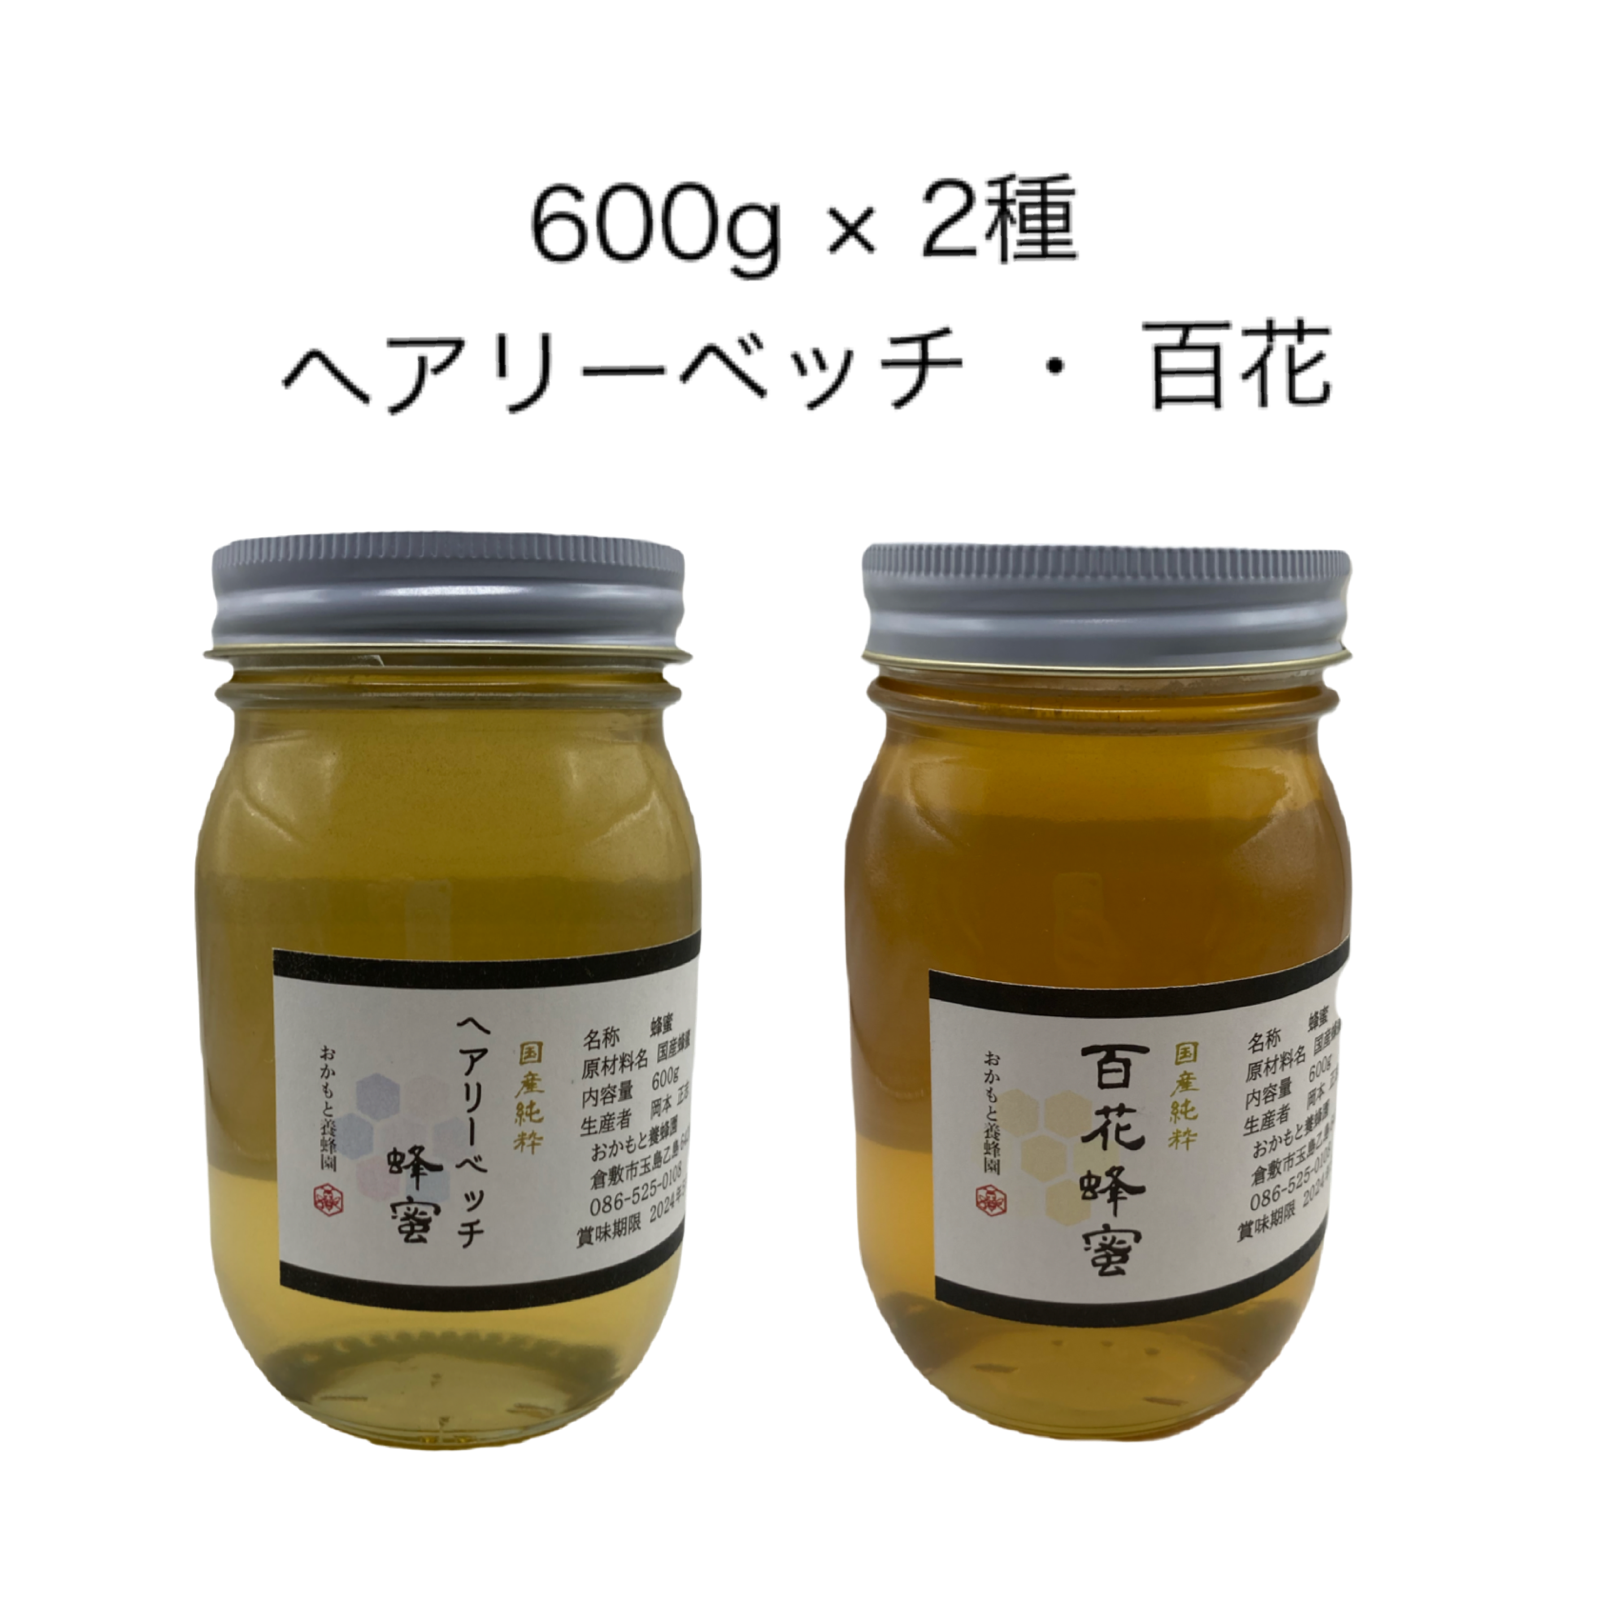 お得クーポン発行中 国産純粋 百花蜂蜜 600g